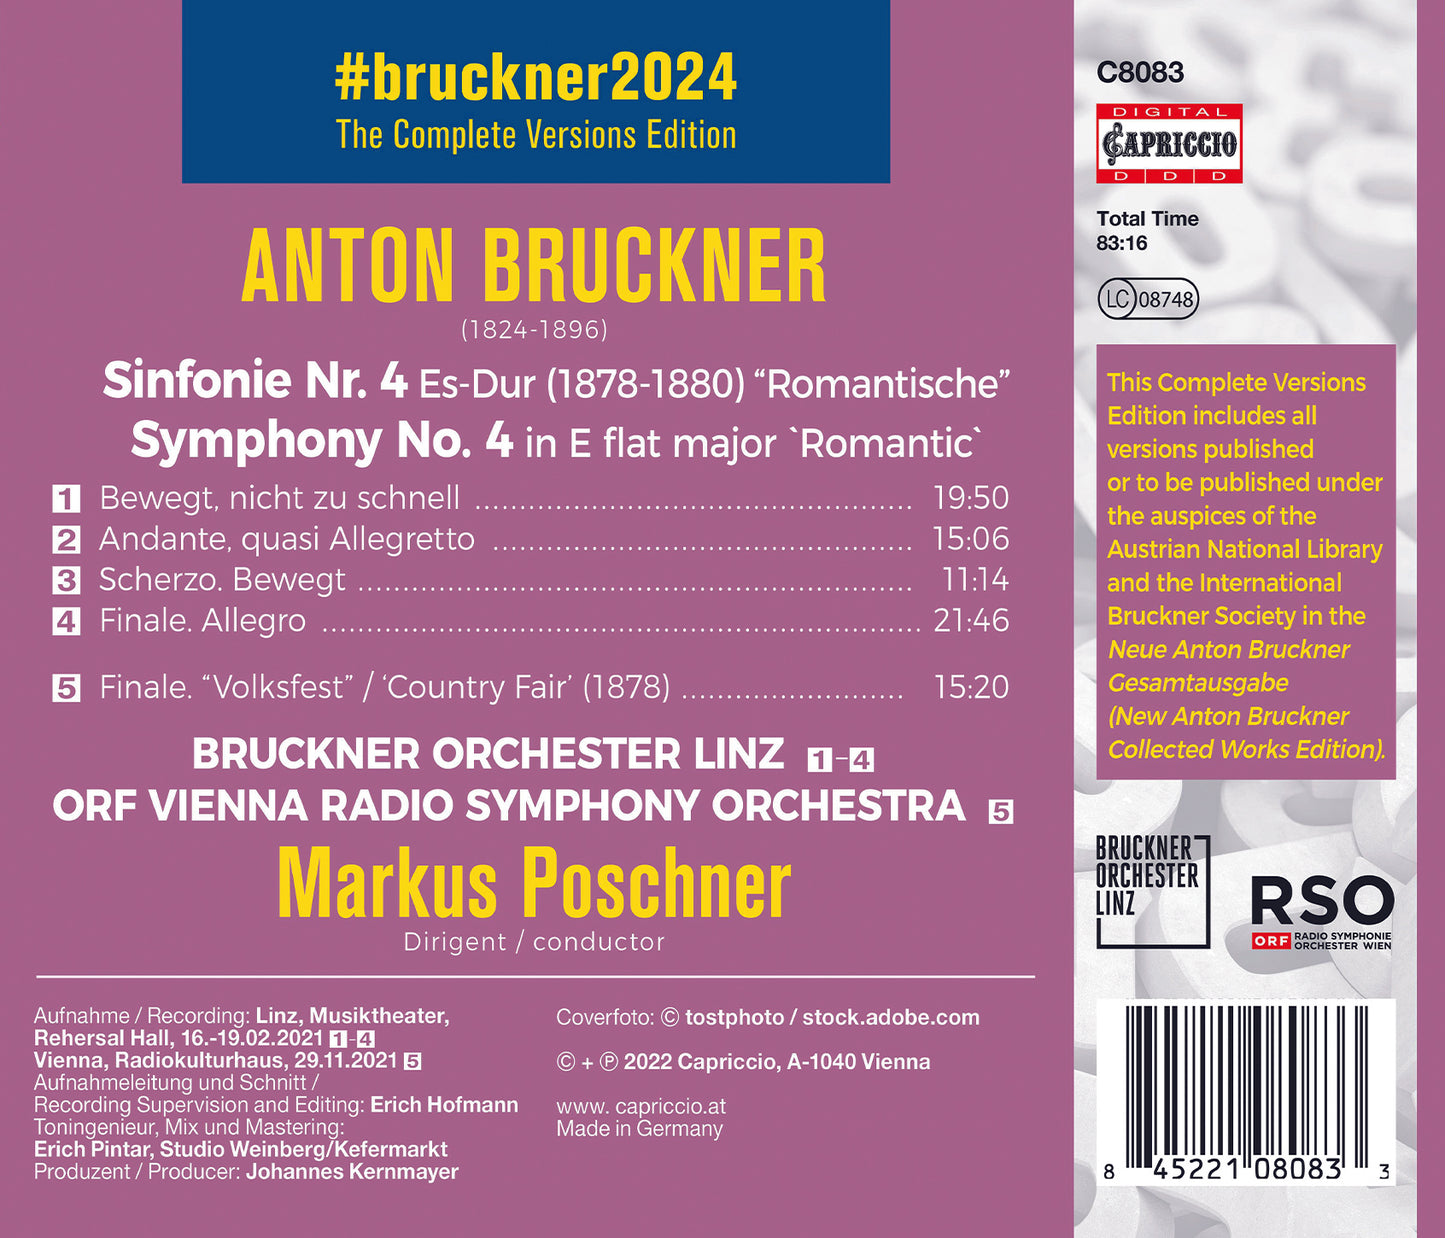 Bruckner: Symphony No. 4 (1878-1880); 'Country Fair' Finale